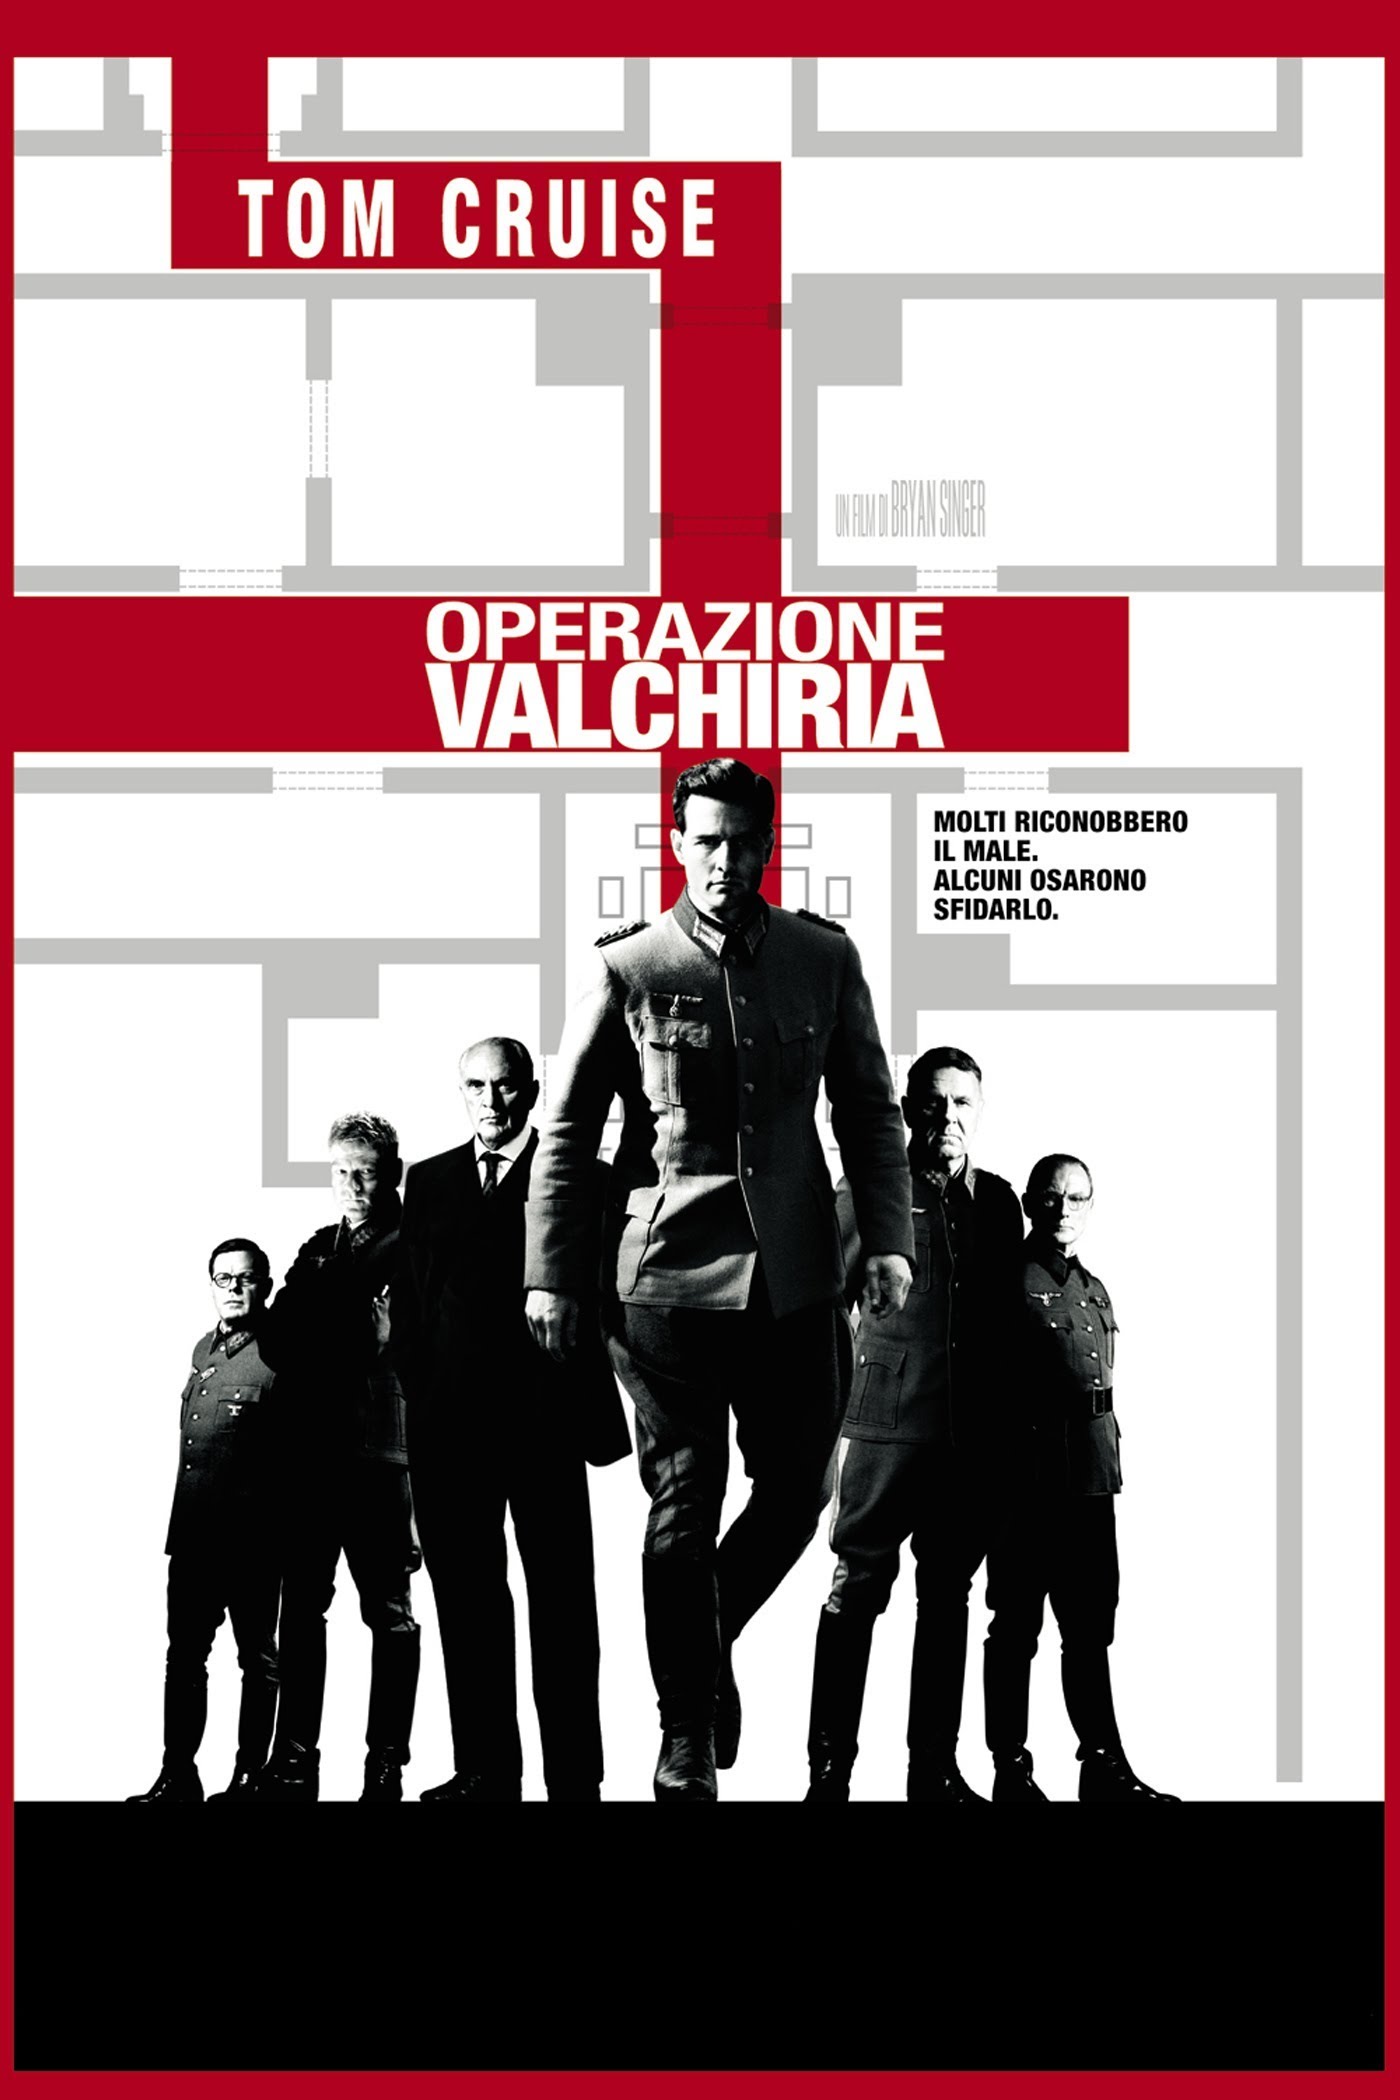 Operazione Valchiria [HD] (2009)